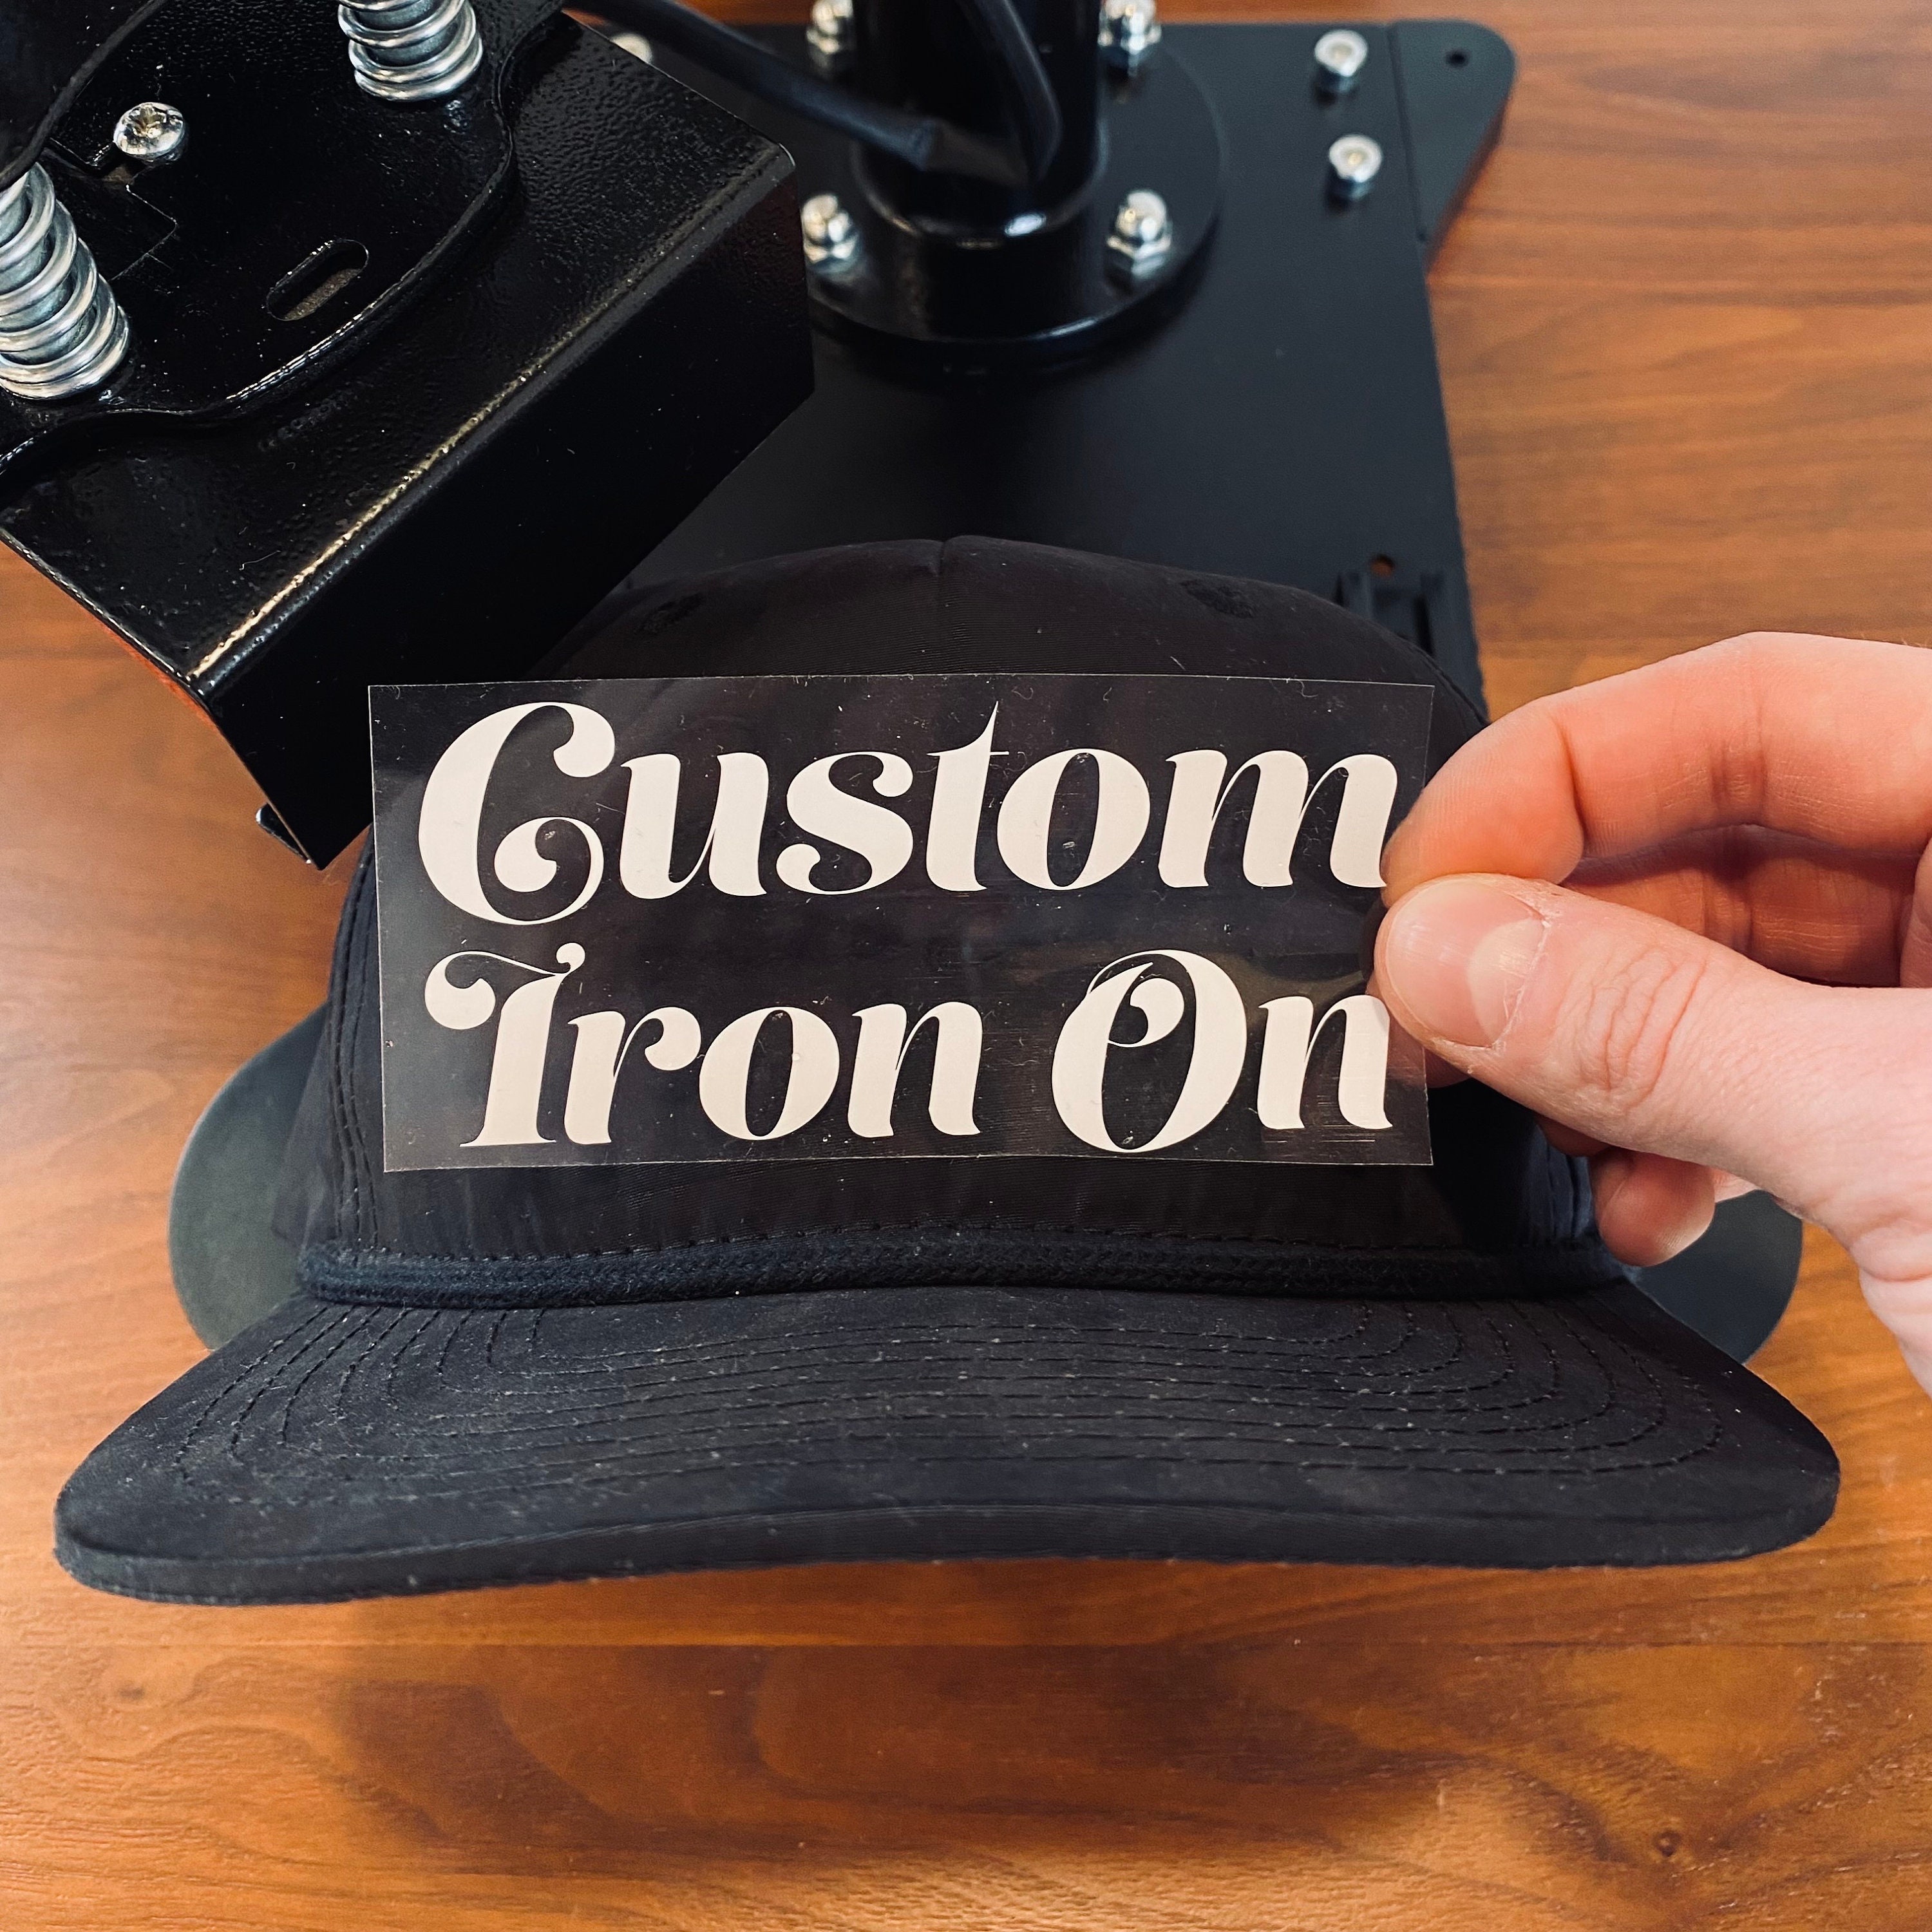 Single Letter Iron on 1 Custom Letter /iron on Vinyl Decal/individual Letter  Heat Transfer 